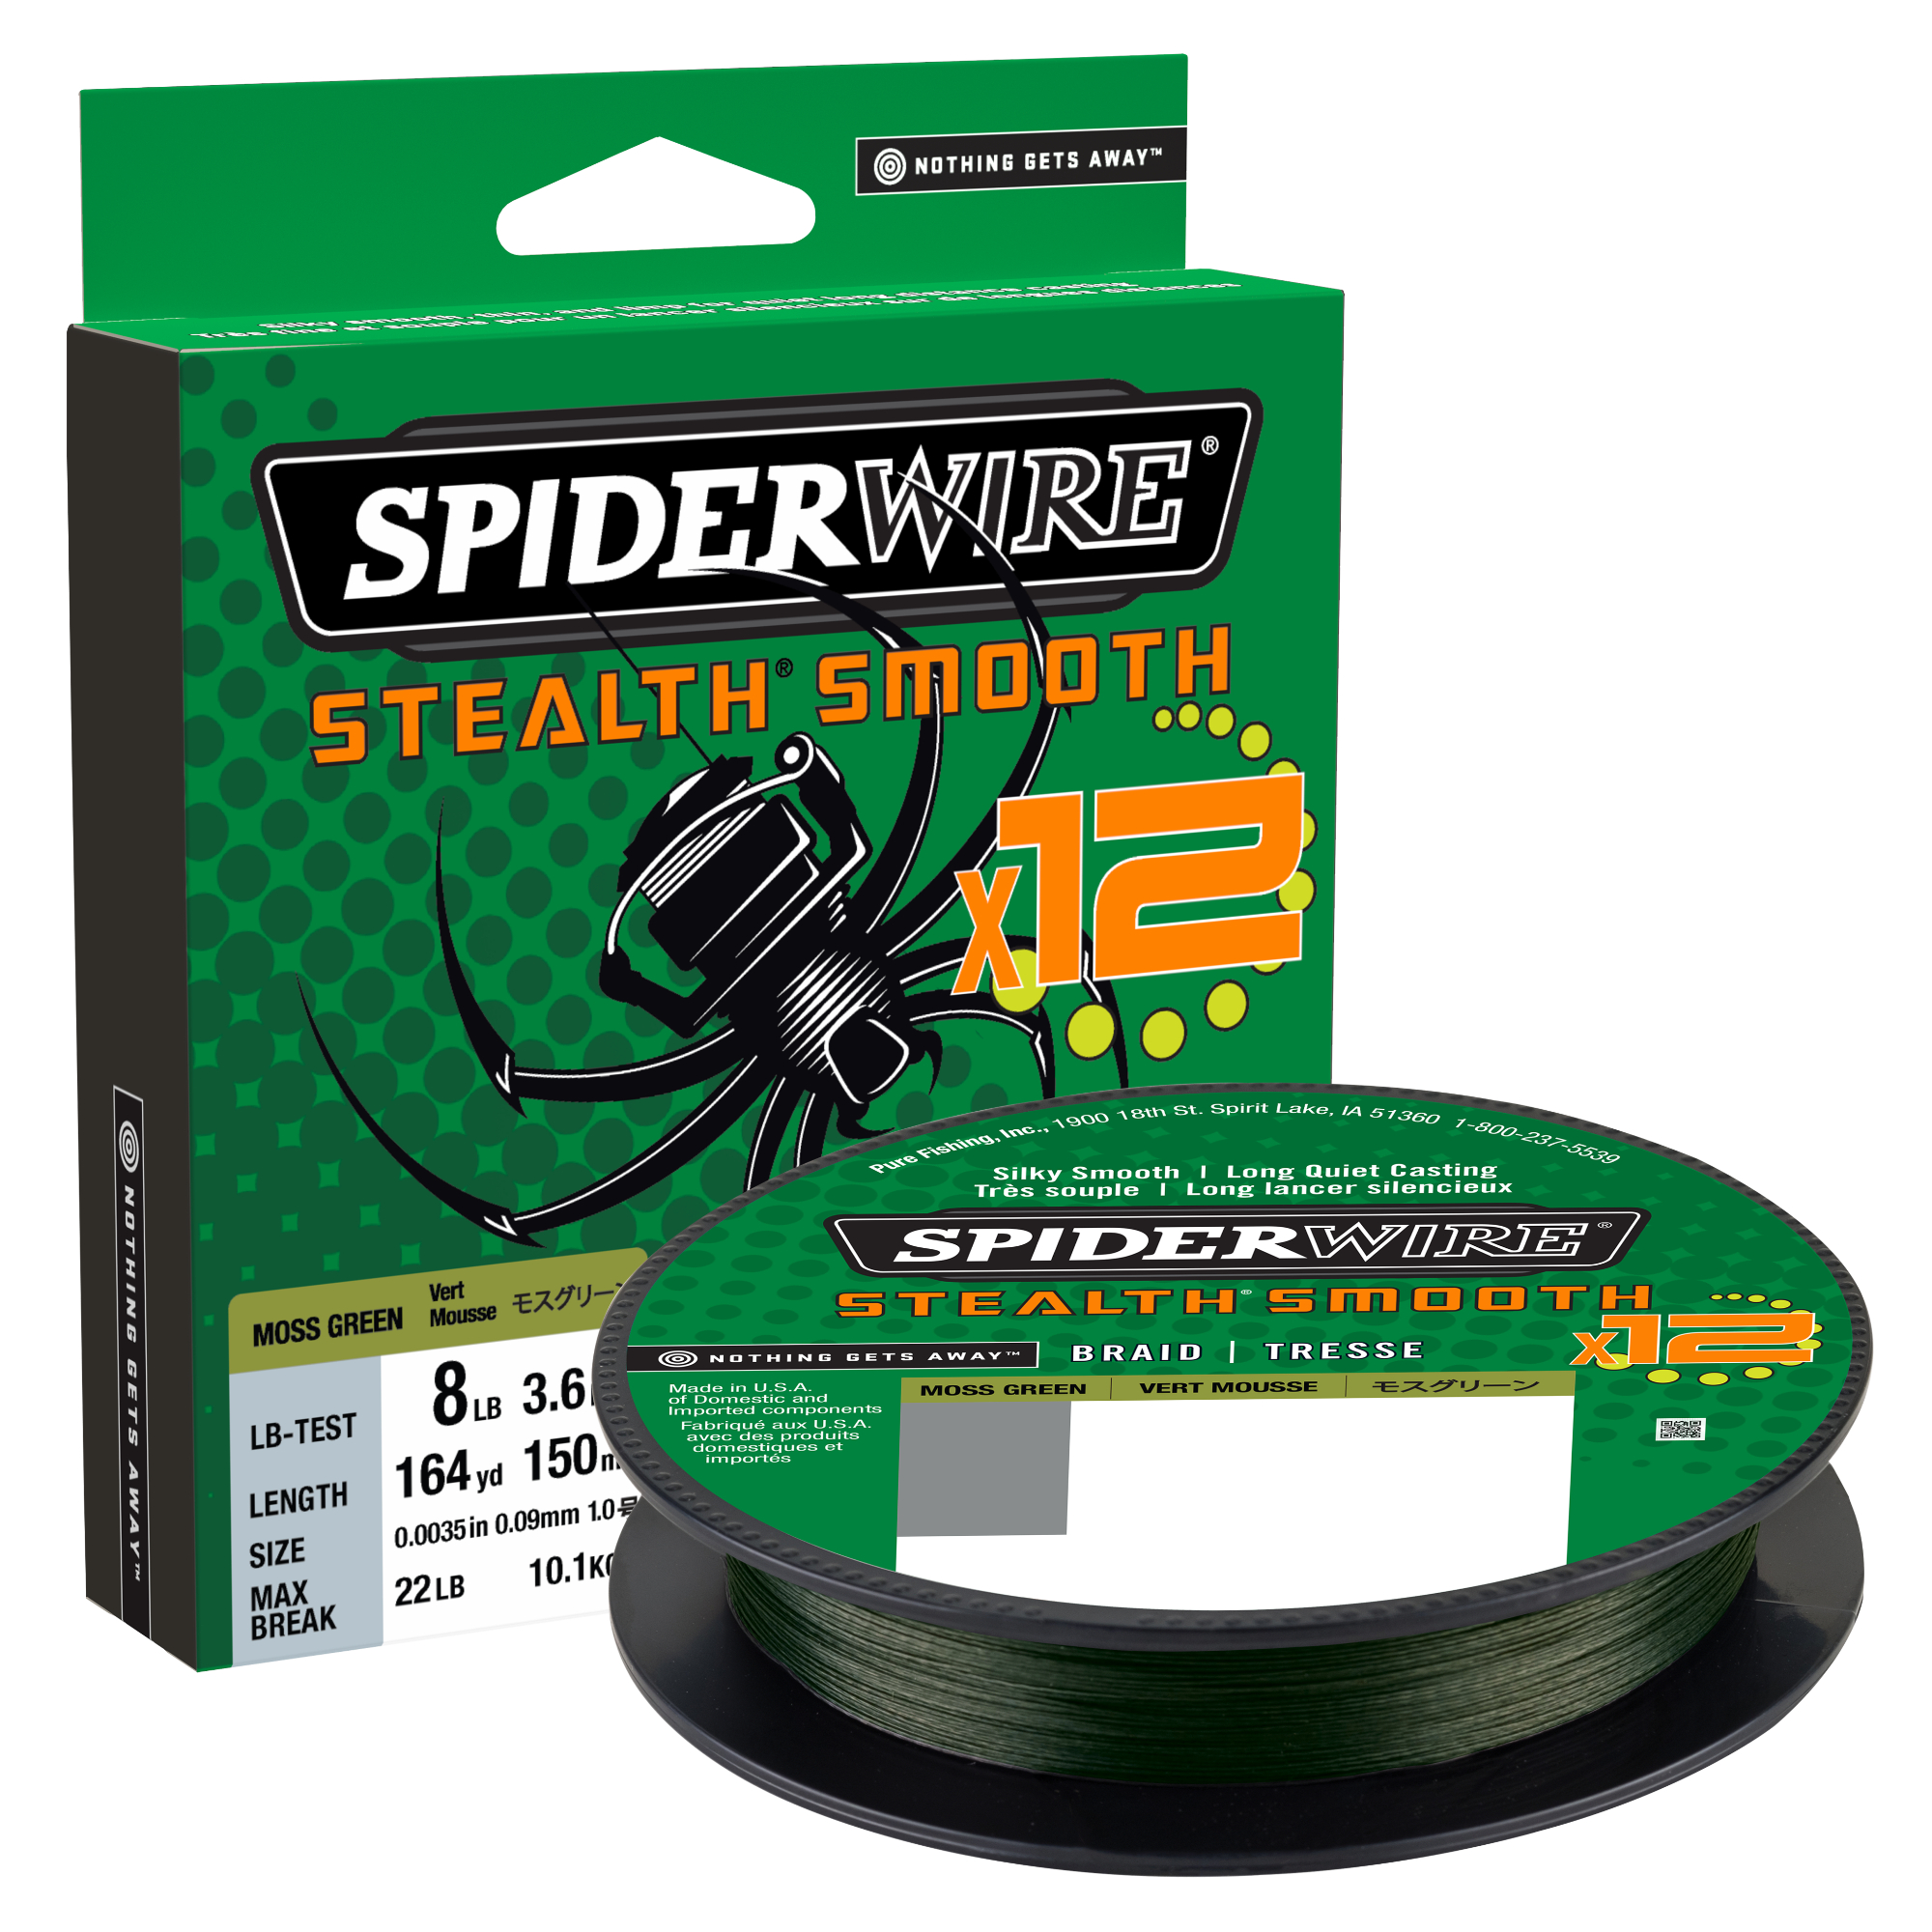 SpiderWire Stealth Smooth 12 Green 0,09mm, 150m